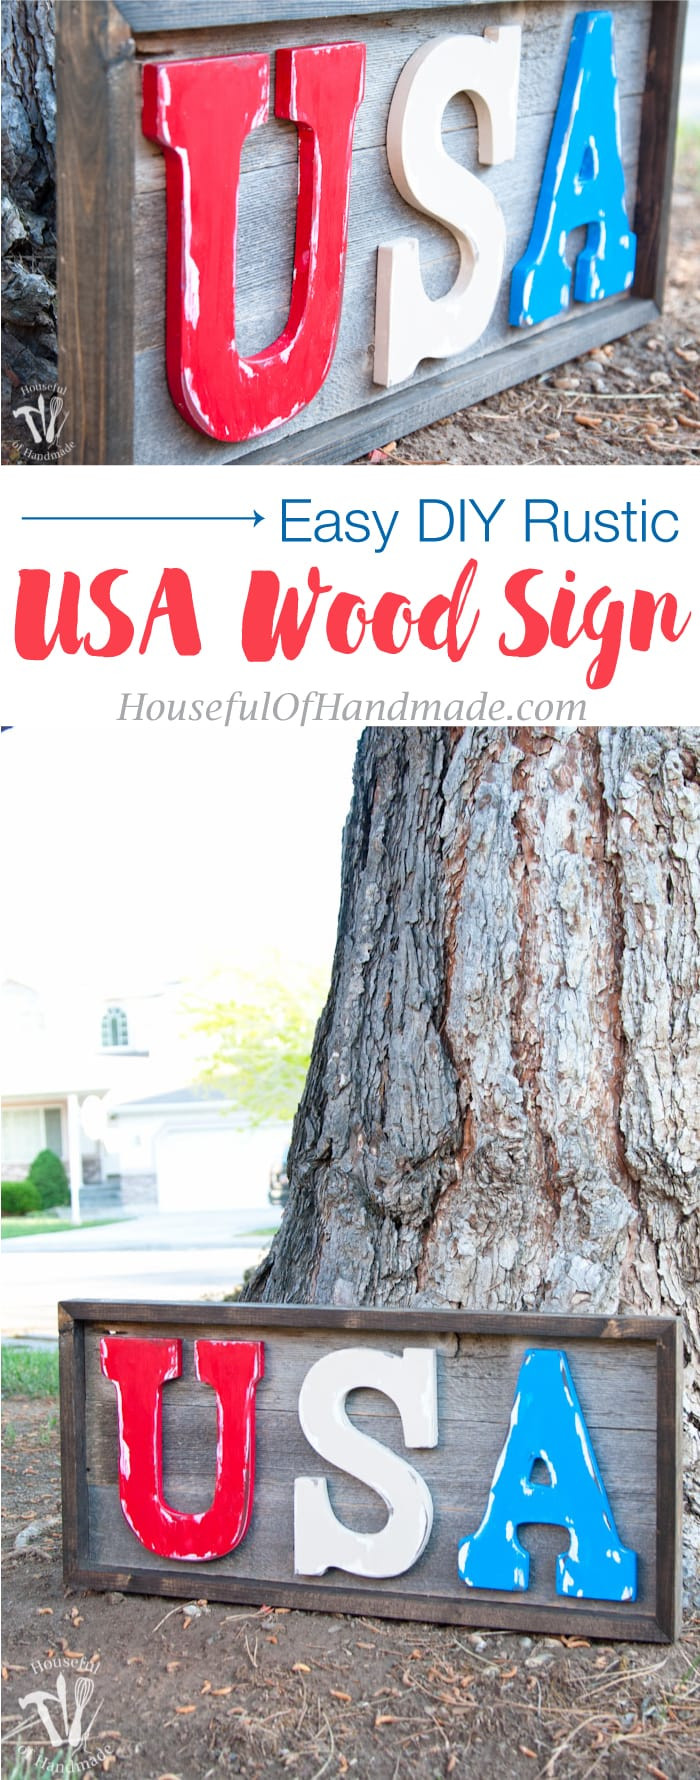 DIY Rustic Wood Signs
 Easy DIY Rustic USA Wood Sign a Houseful of Handmade